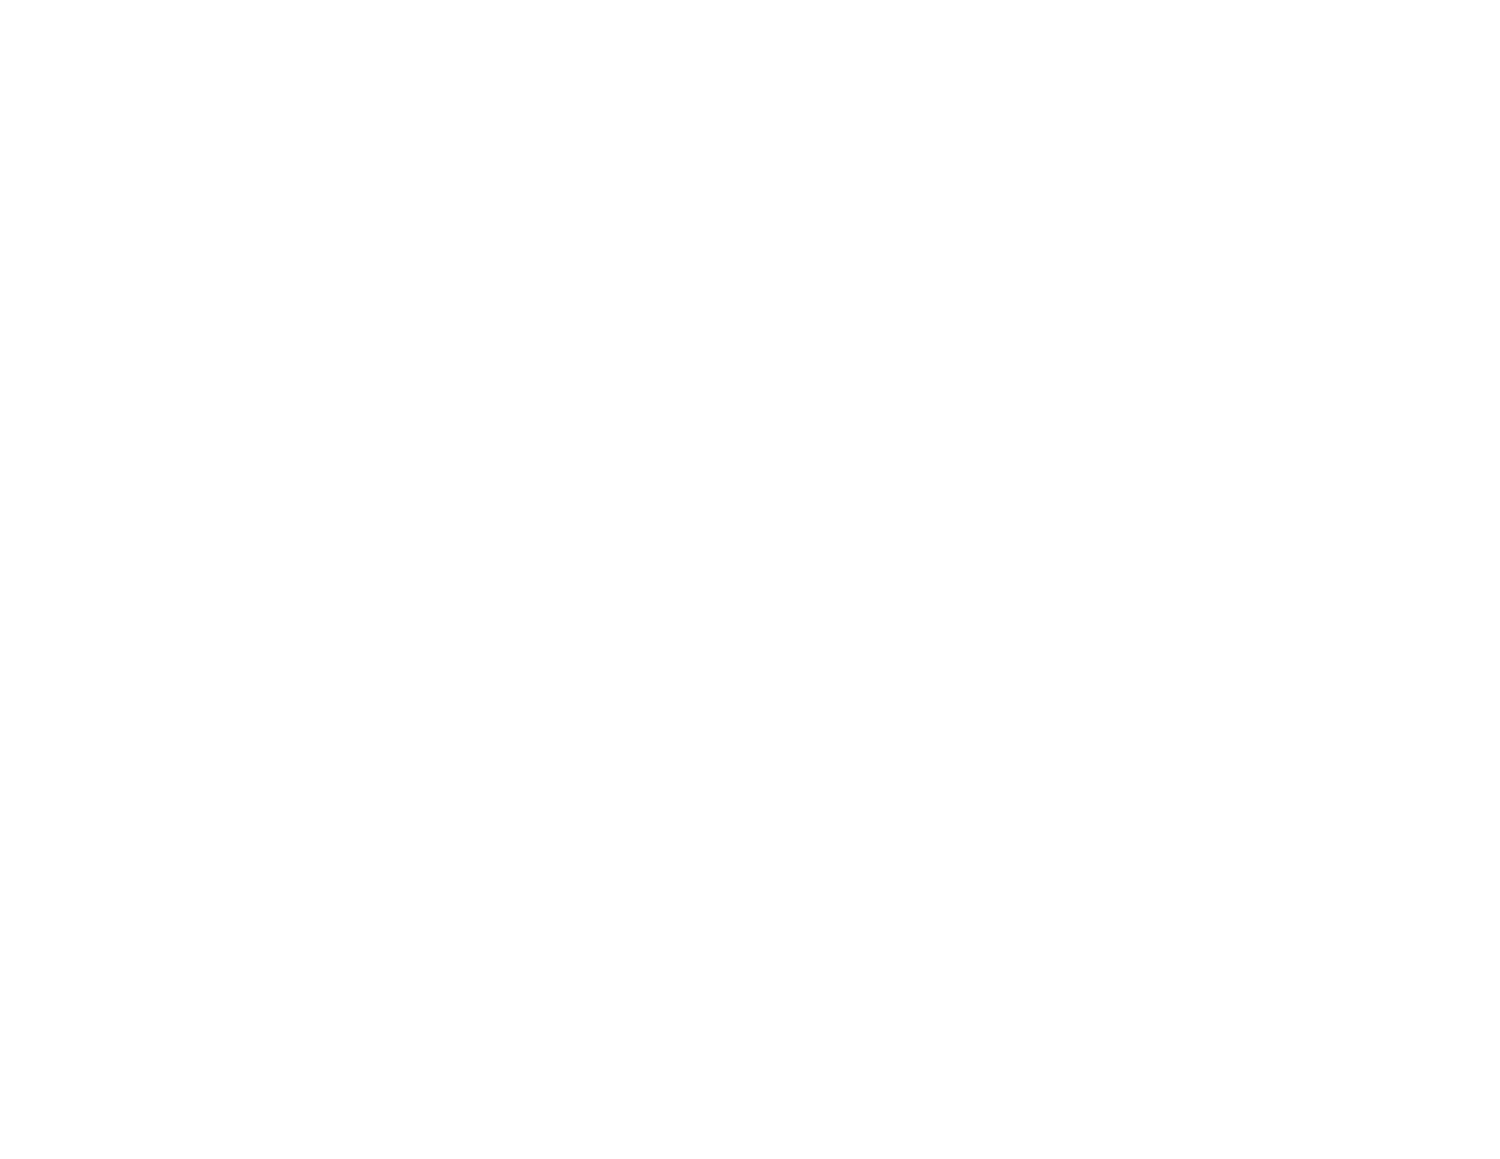 CARCASS OF A DEAD STAR